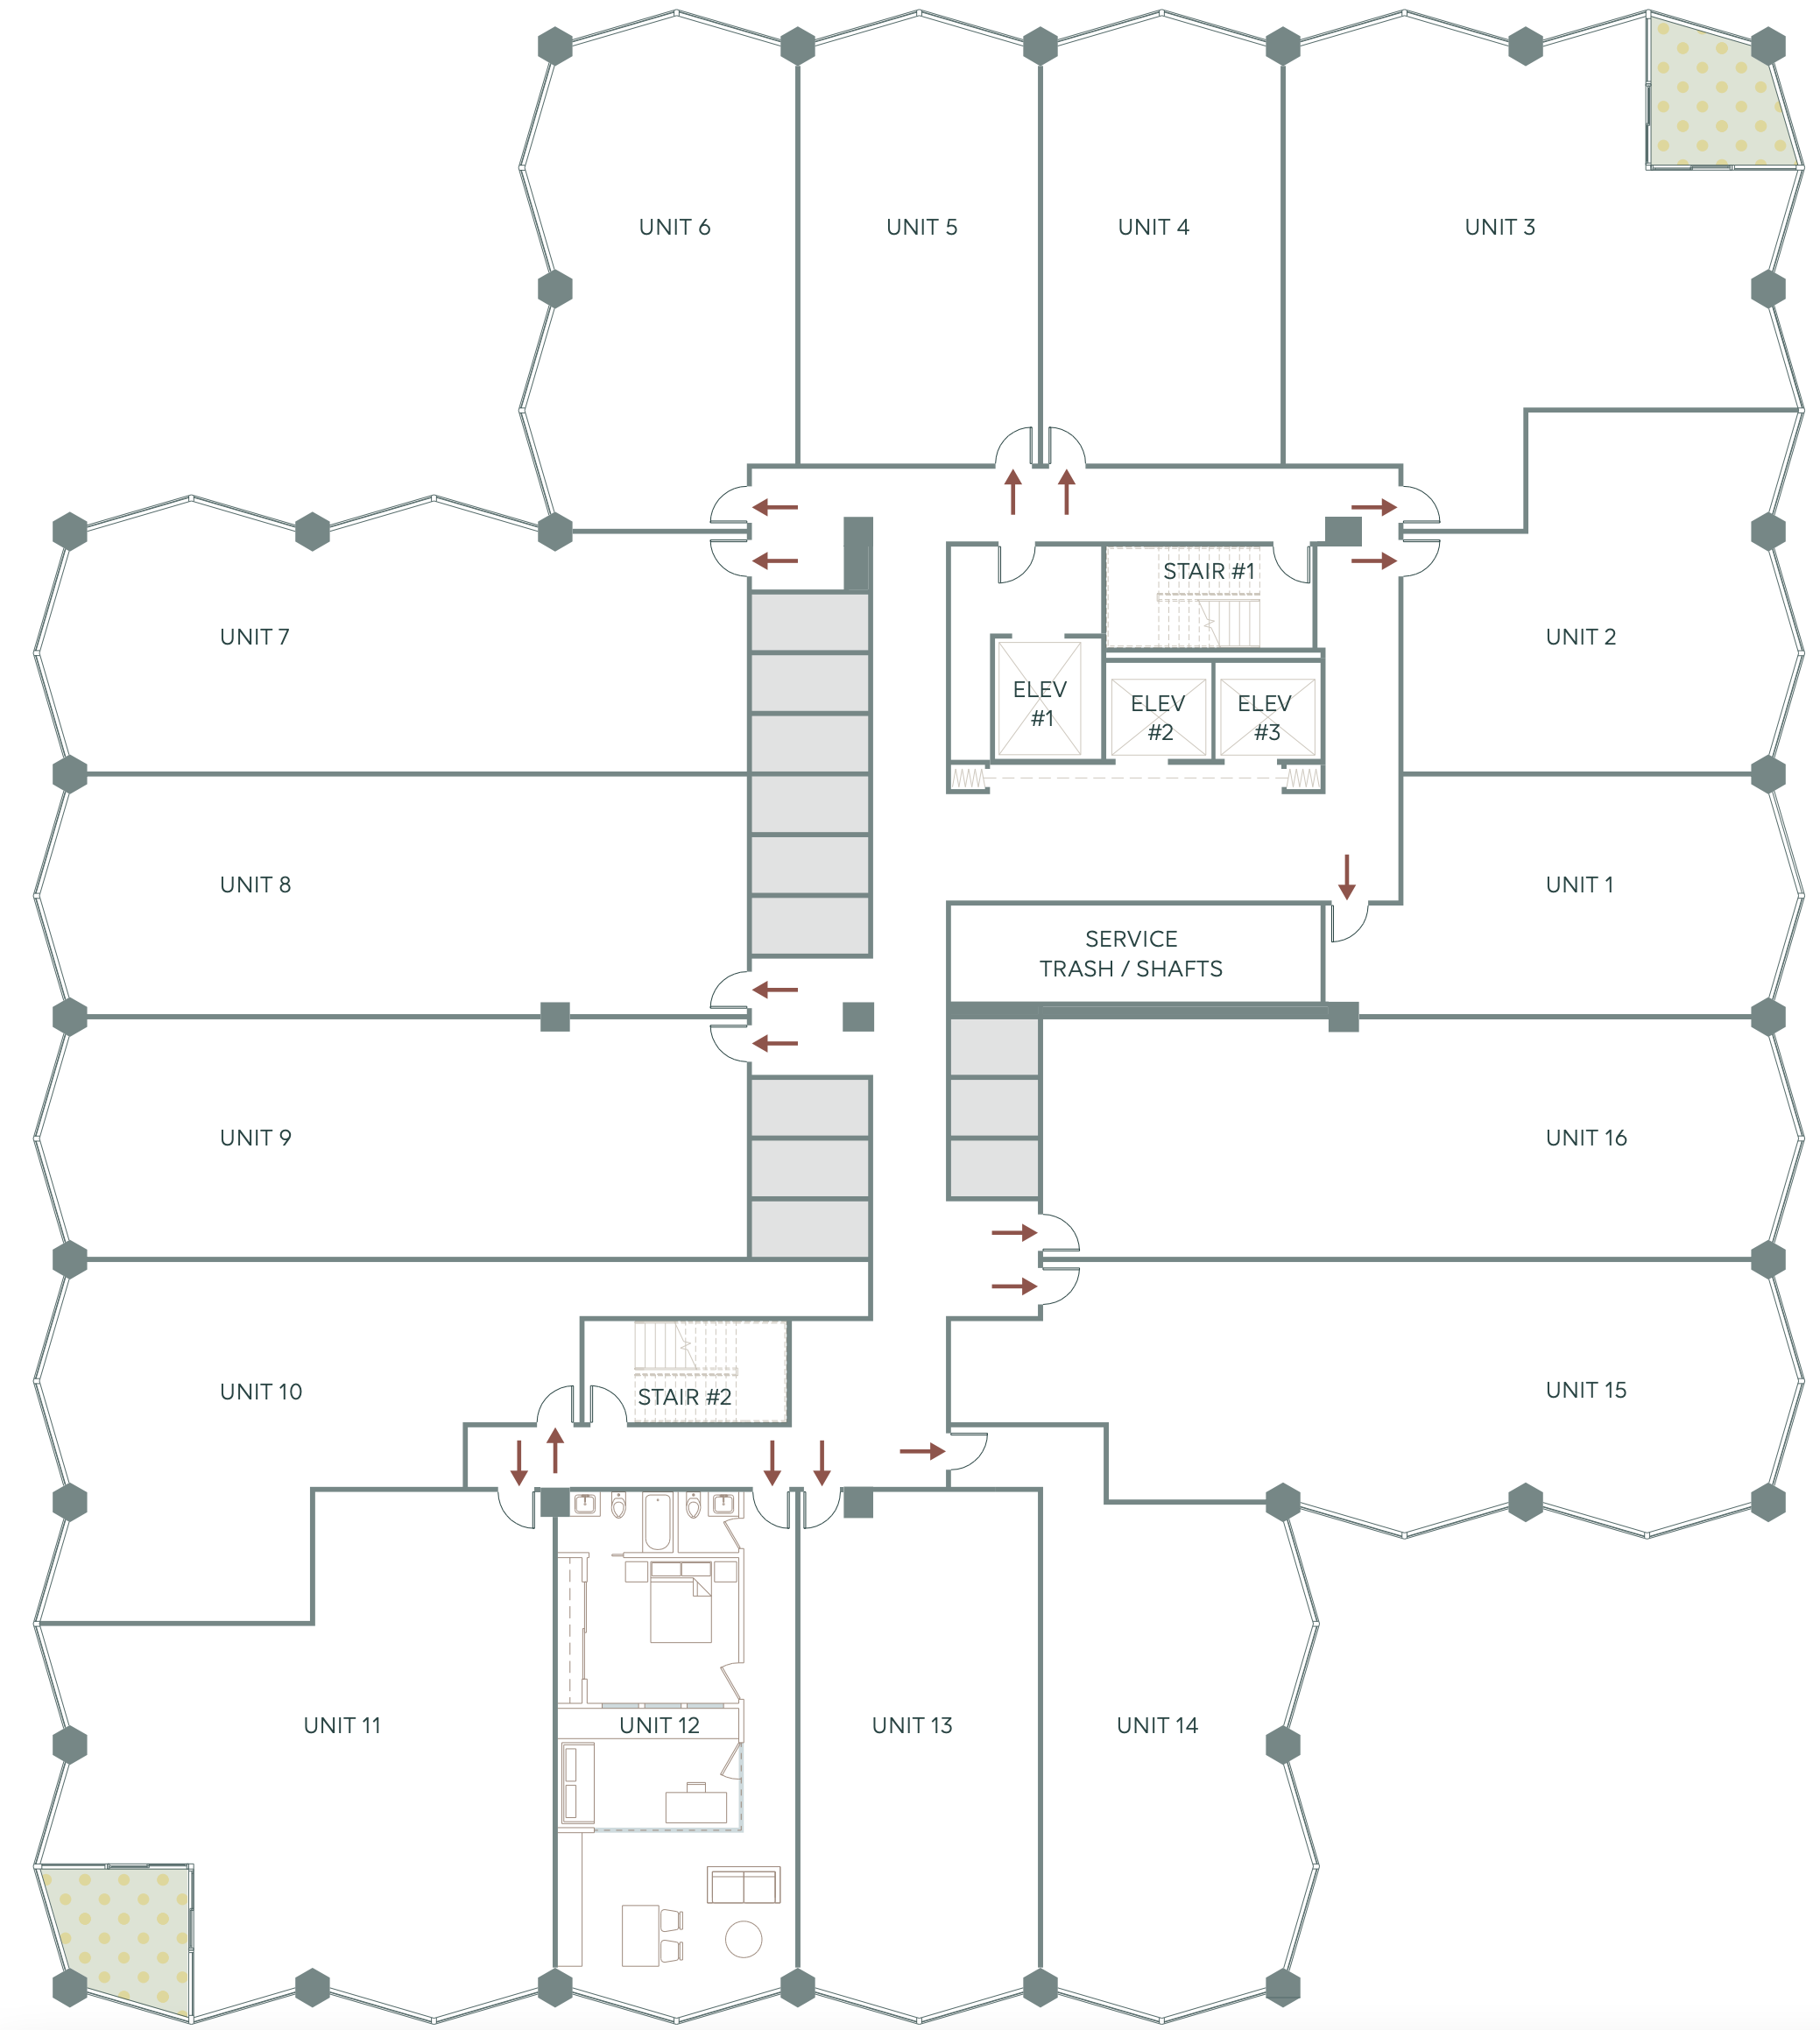 19.1 floor layout